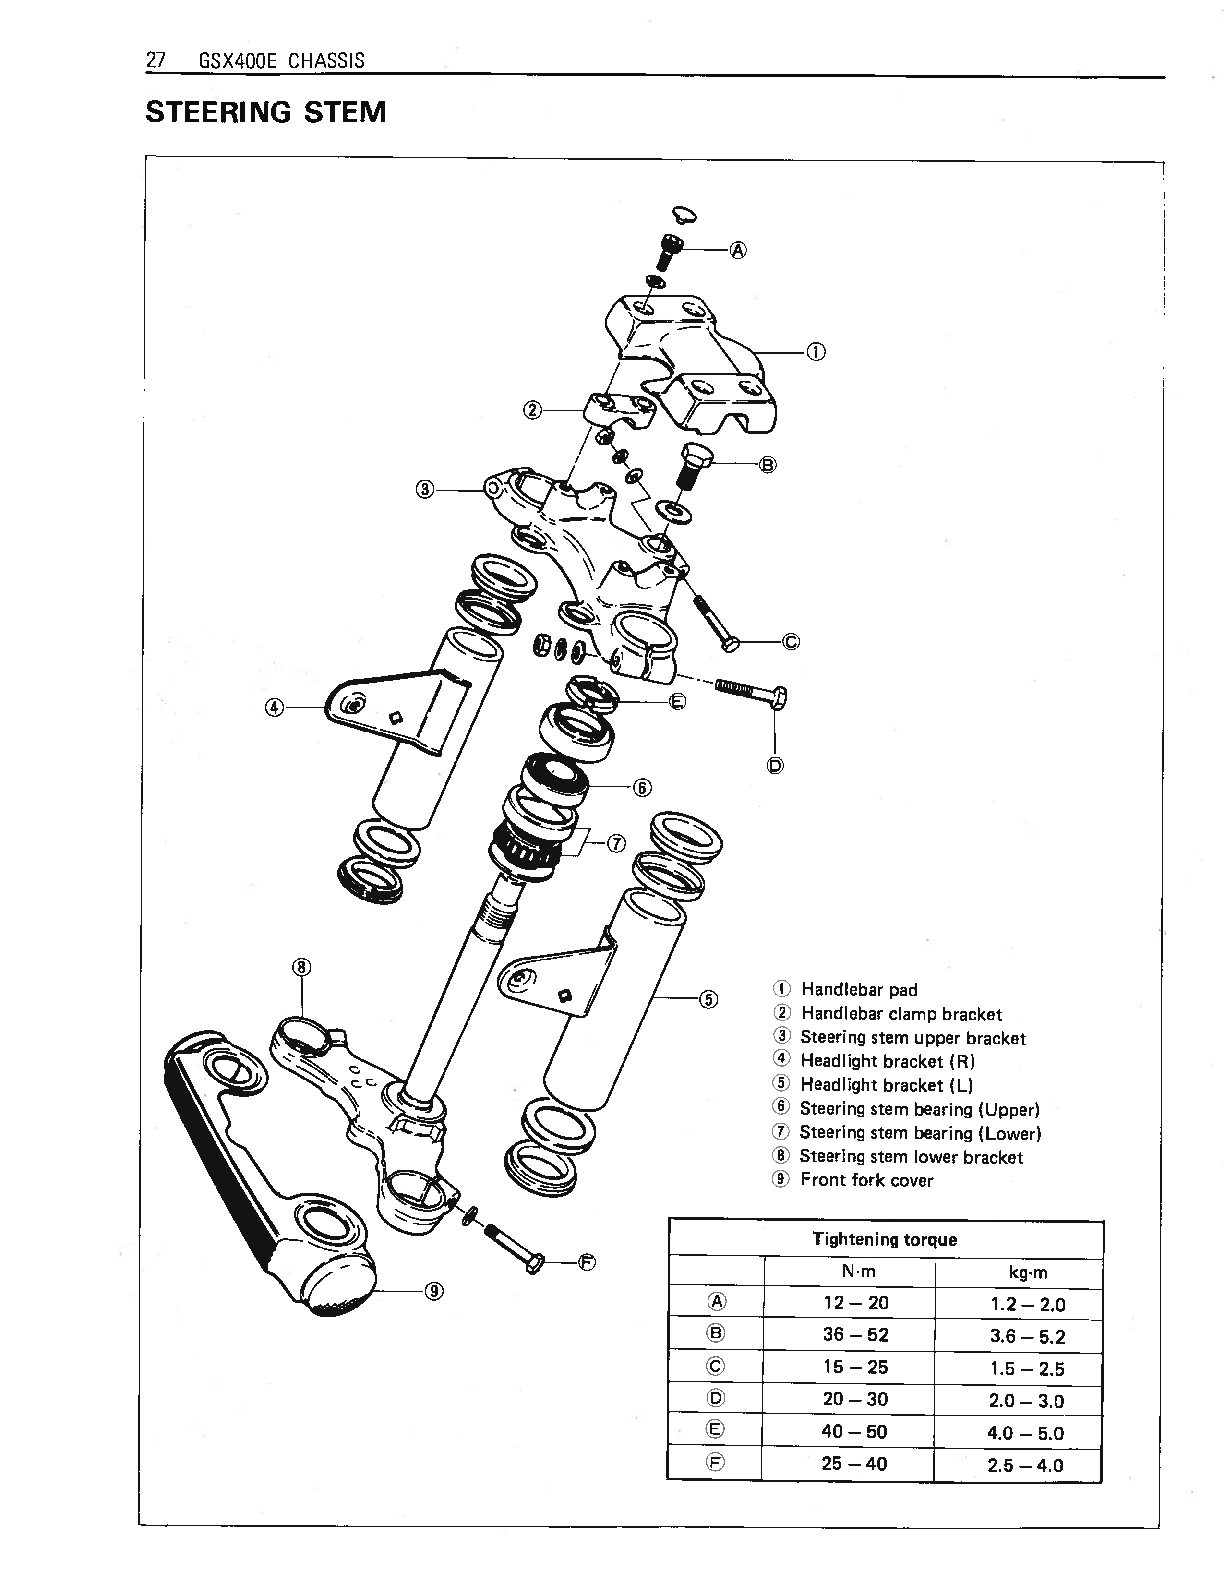 1980-1984 Suzuki GSX400L Twin Cylinder Service Manual